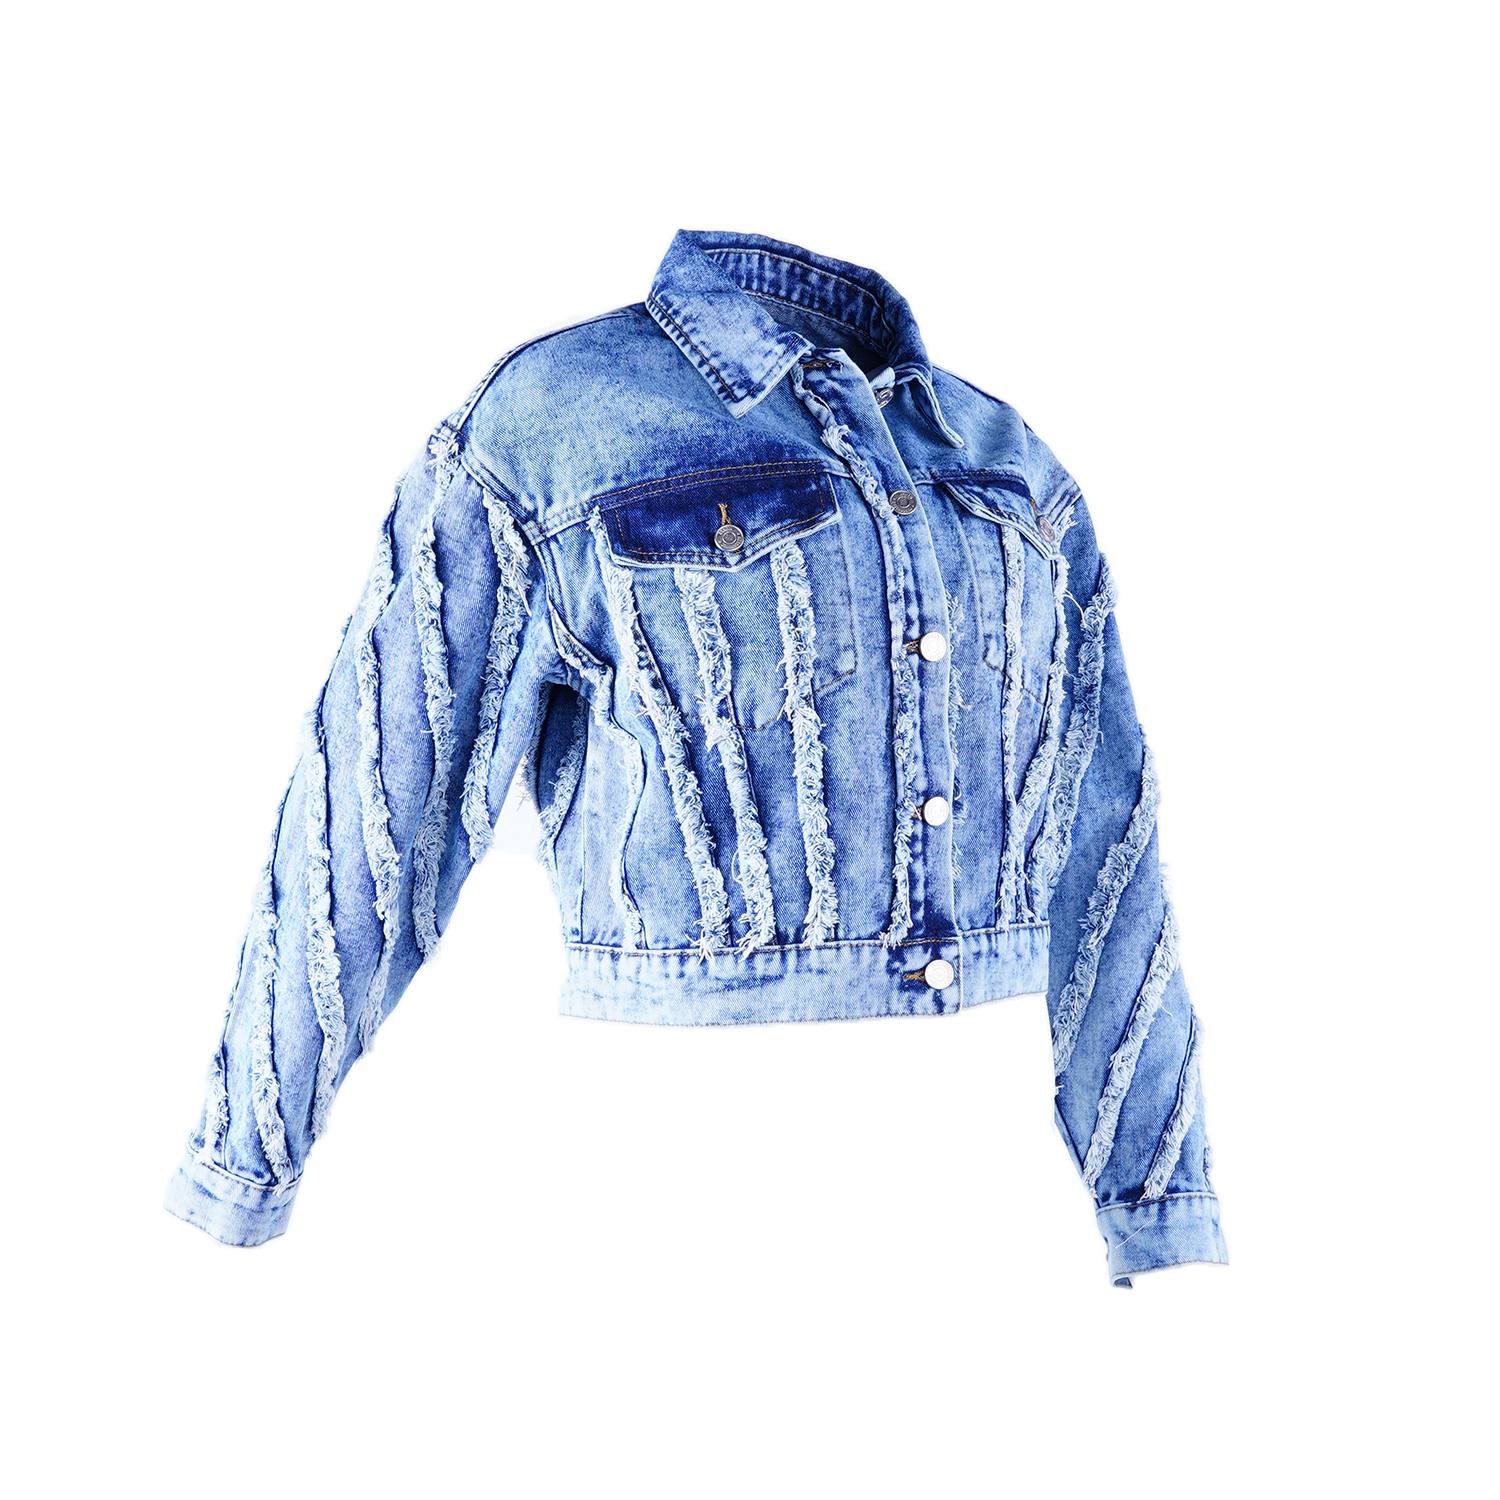 SKYKINGDOM hot sale fall jackets denim blue long sleeve buttons front pockets tassel stripes jeans jackets